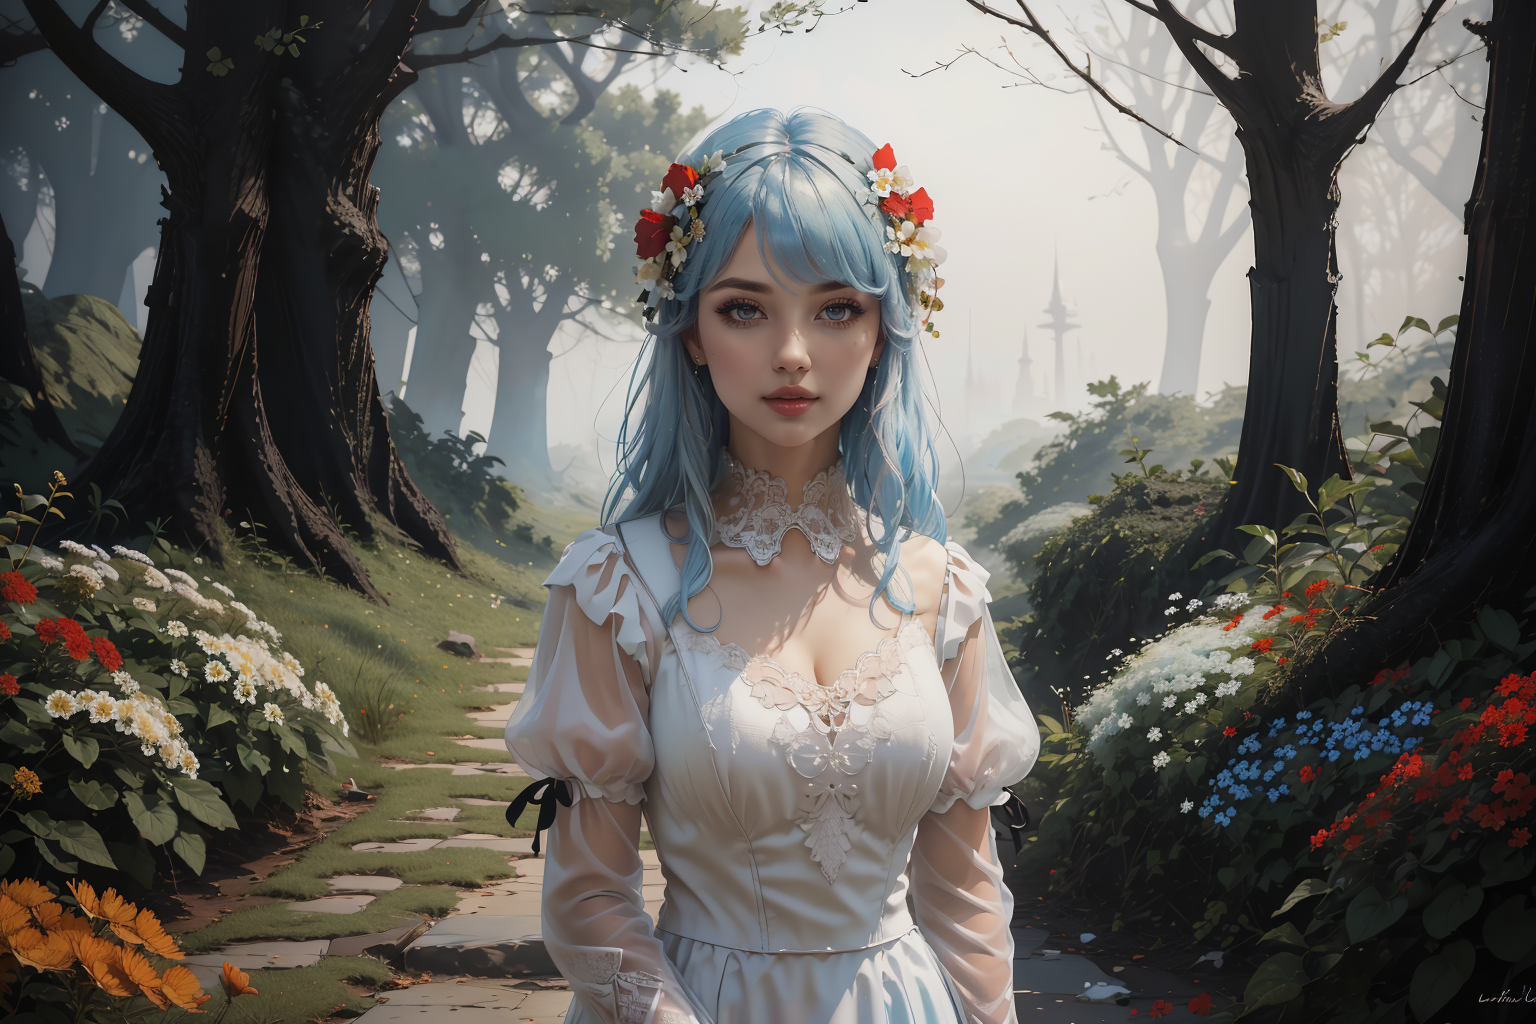 General 1536x1024 AI art digital art hair ornament flower crown white dress Caucasian blue hair forest fantasy girl looking at viewer dress blue eyes